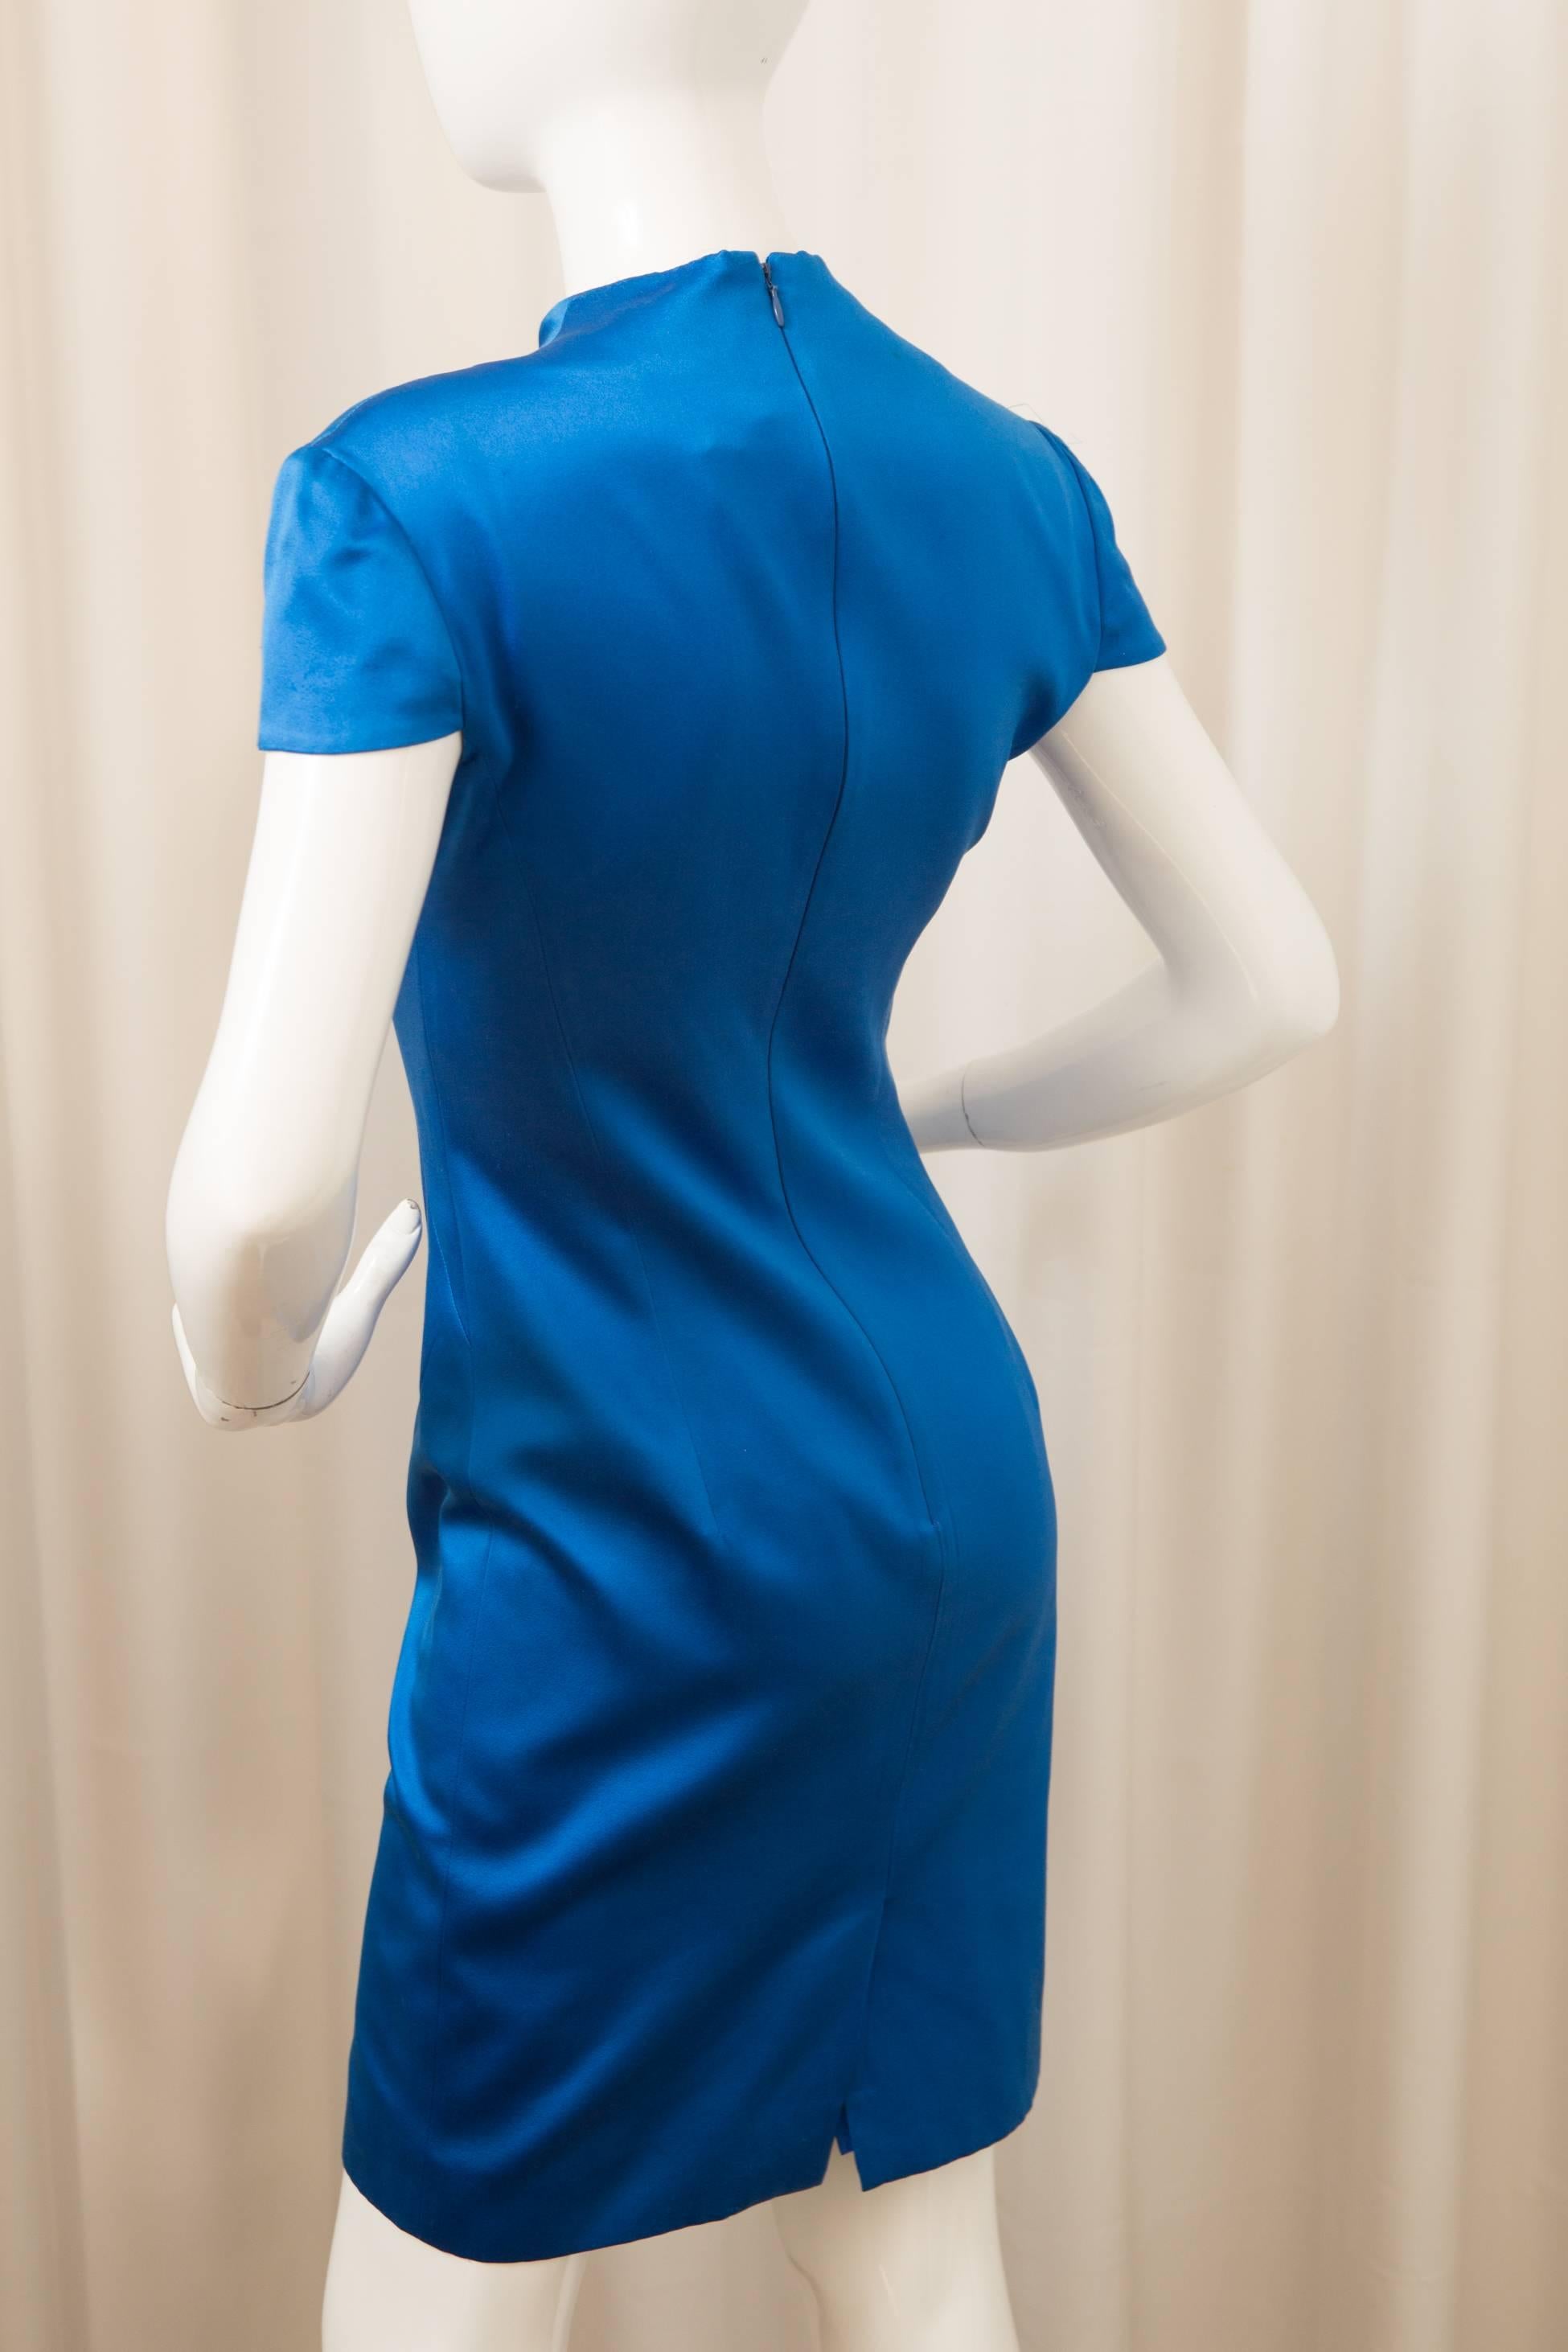 Alexander McQueen Royal Blue Short Sleeve Dress For Sale 2